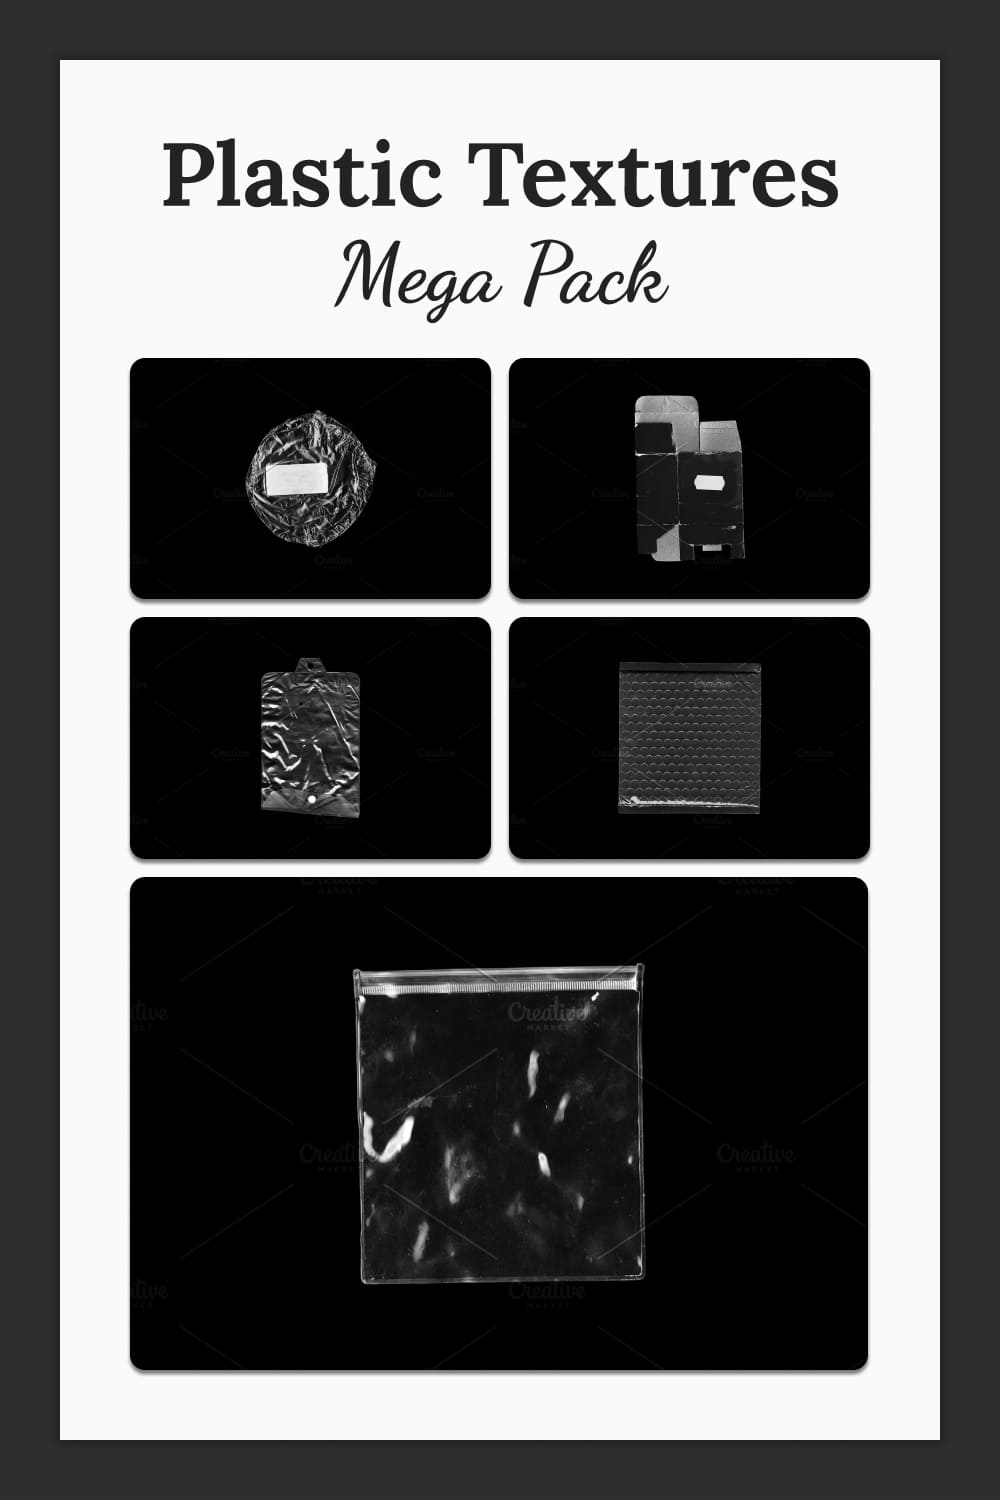 Plastic textures mega pack - pinterest image preview.